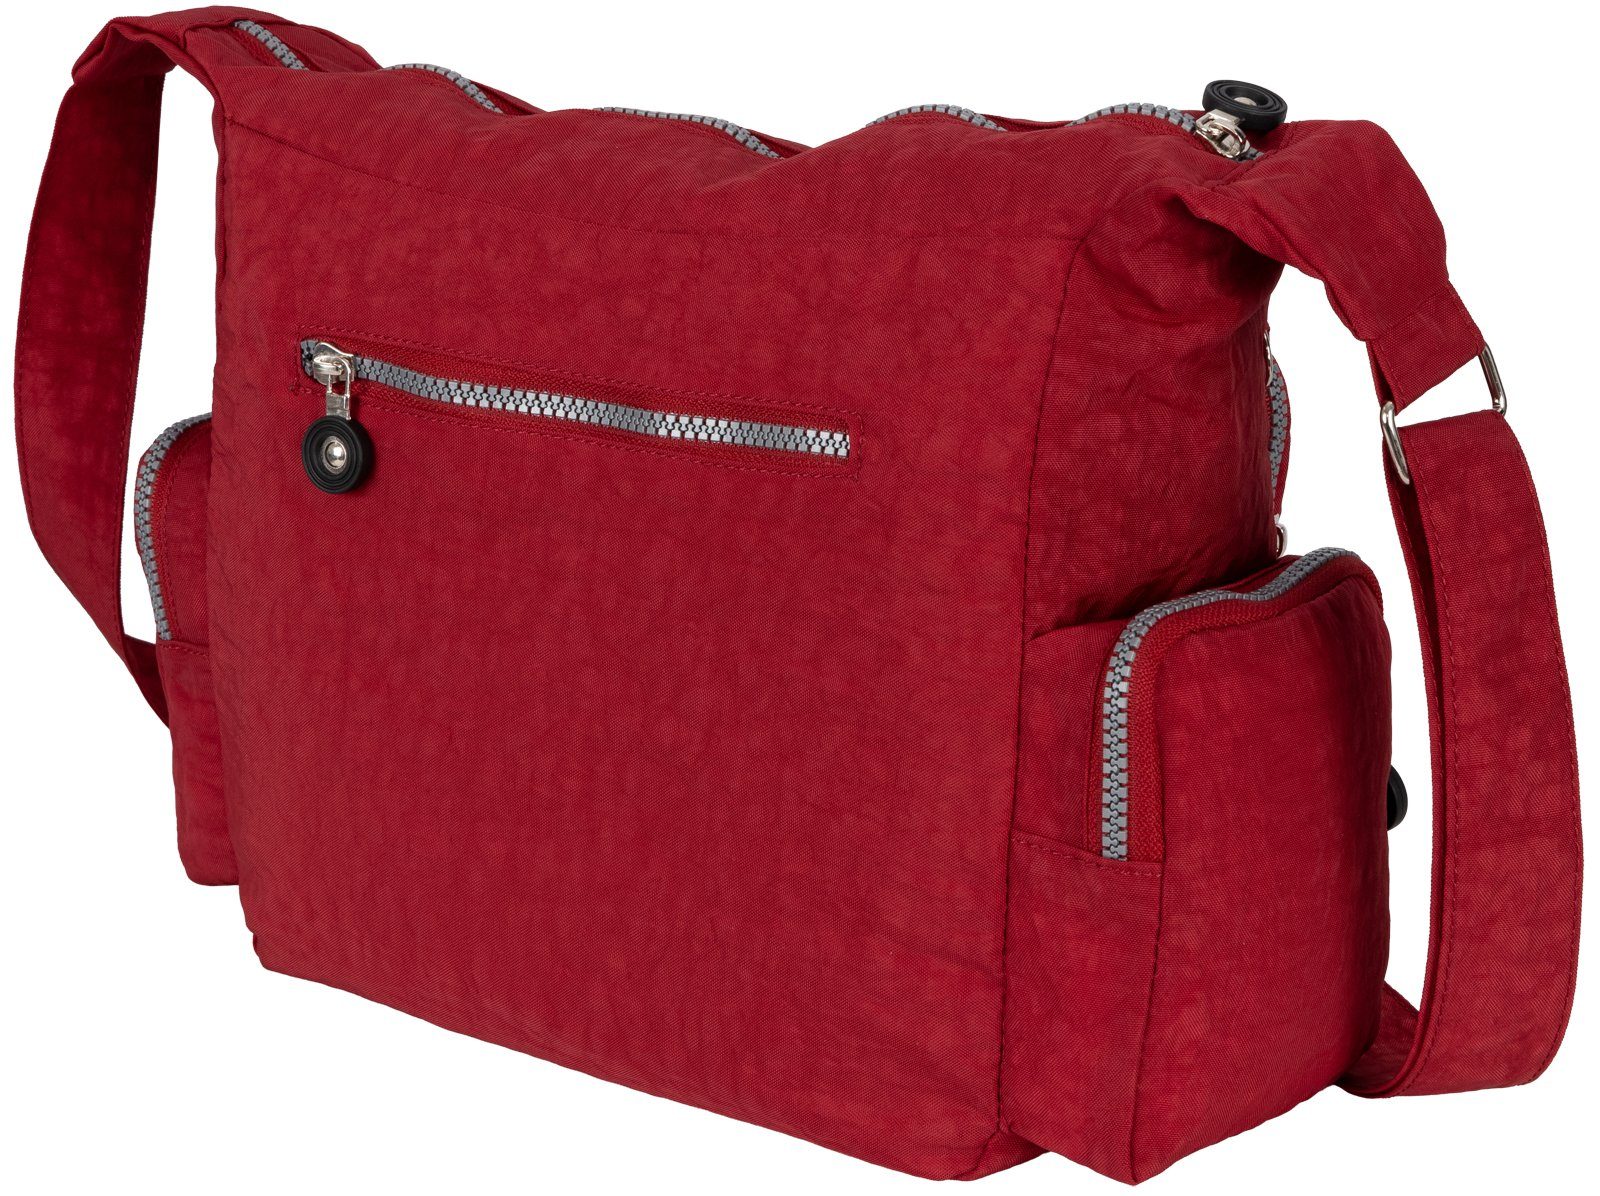 Schultertasche Umhängetasche STREET Umhängetasche tragbar Damentasche BAG Rot Taupe, Schultertasche, Umhängetasche als Handtasche